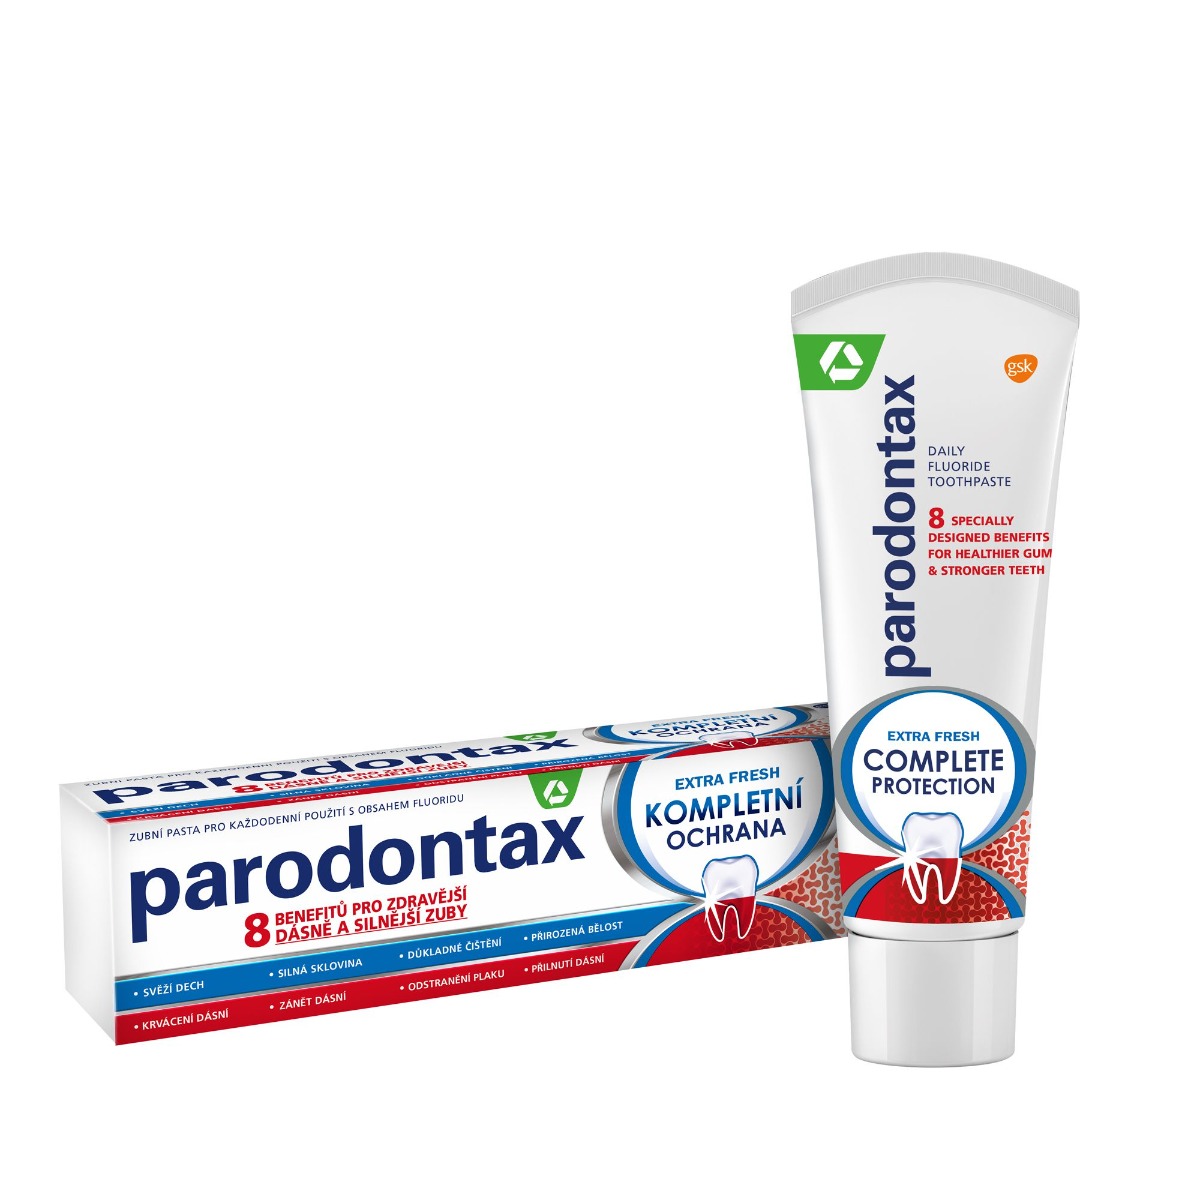 Parodontax Kompletní ochrana Extra fresh zubní pasta 75 ml Parodontax